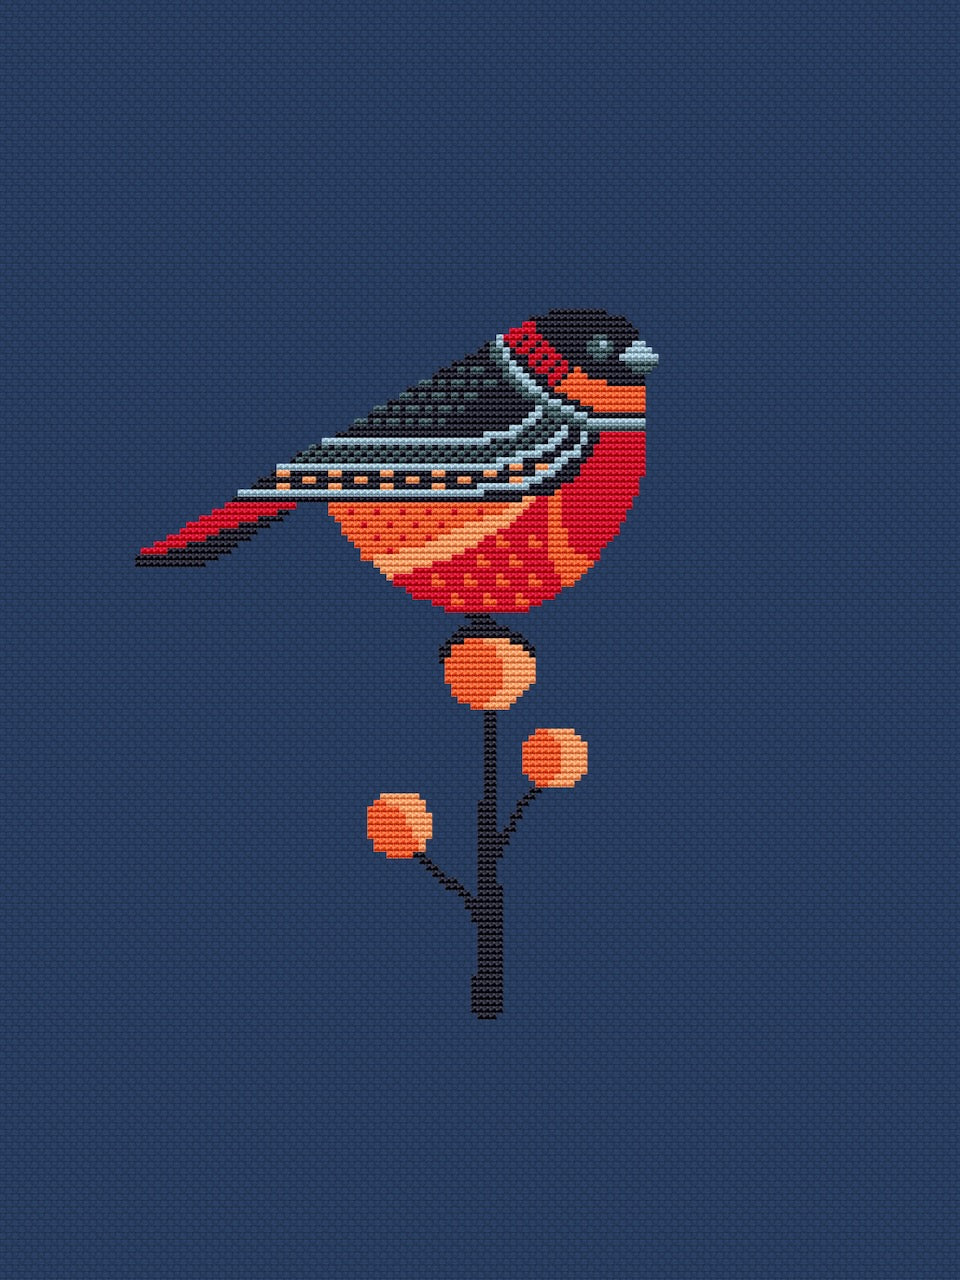 snowbird embroidery pattern